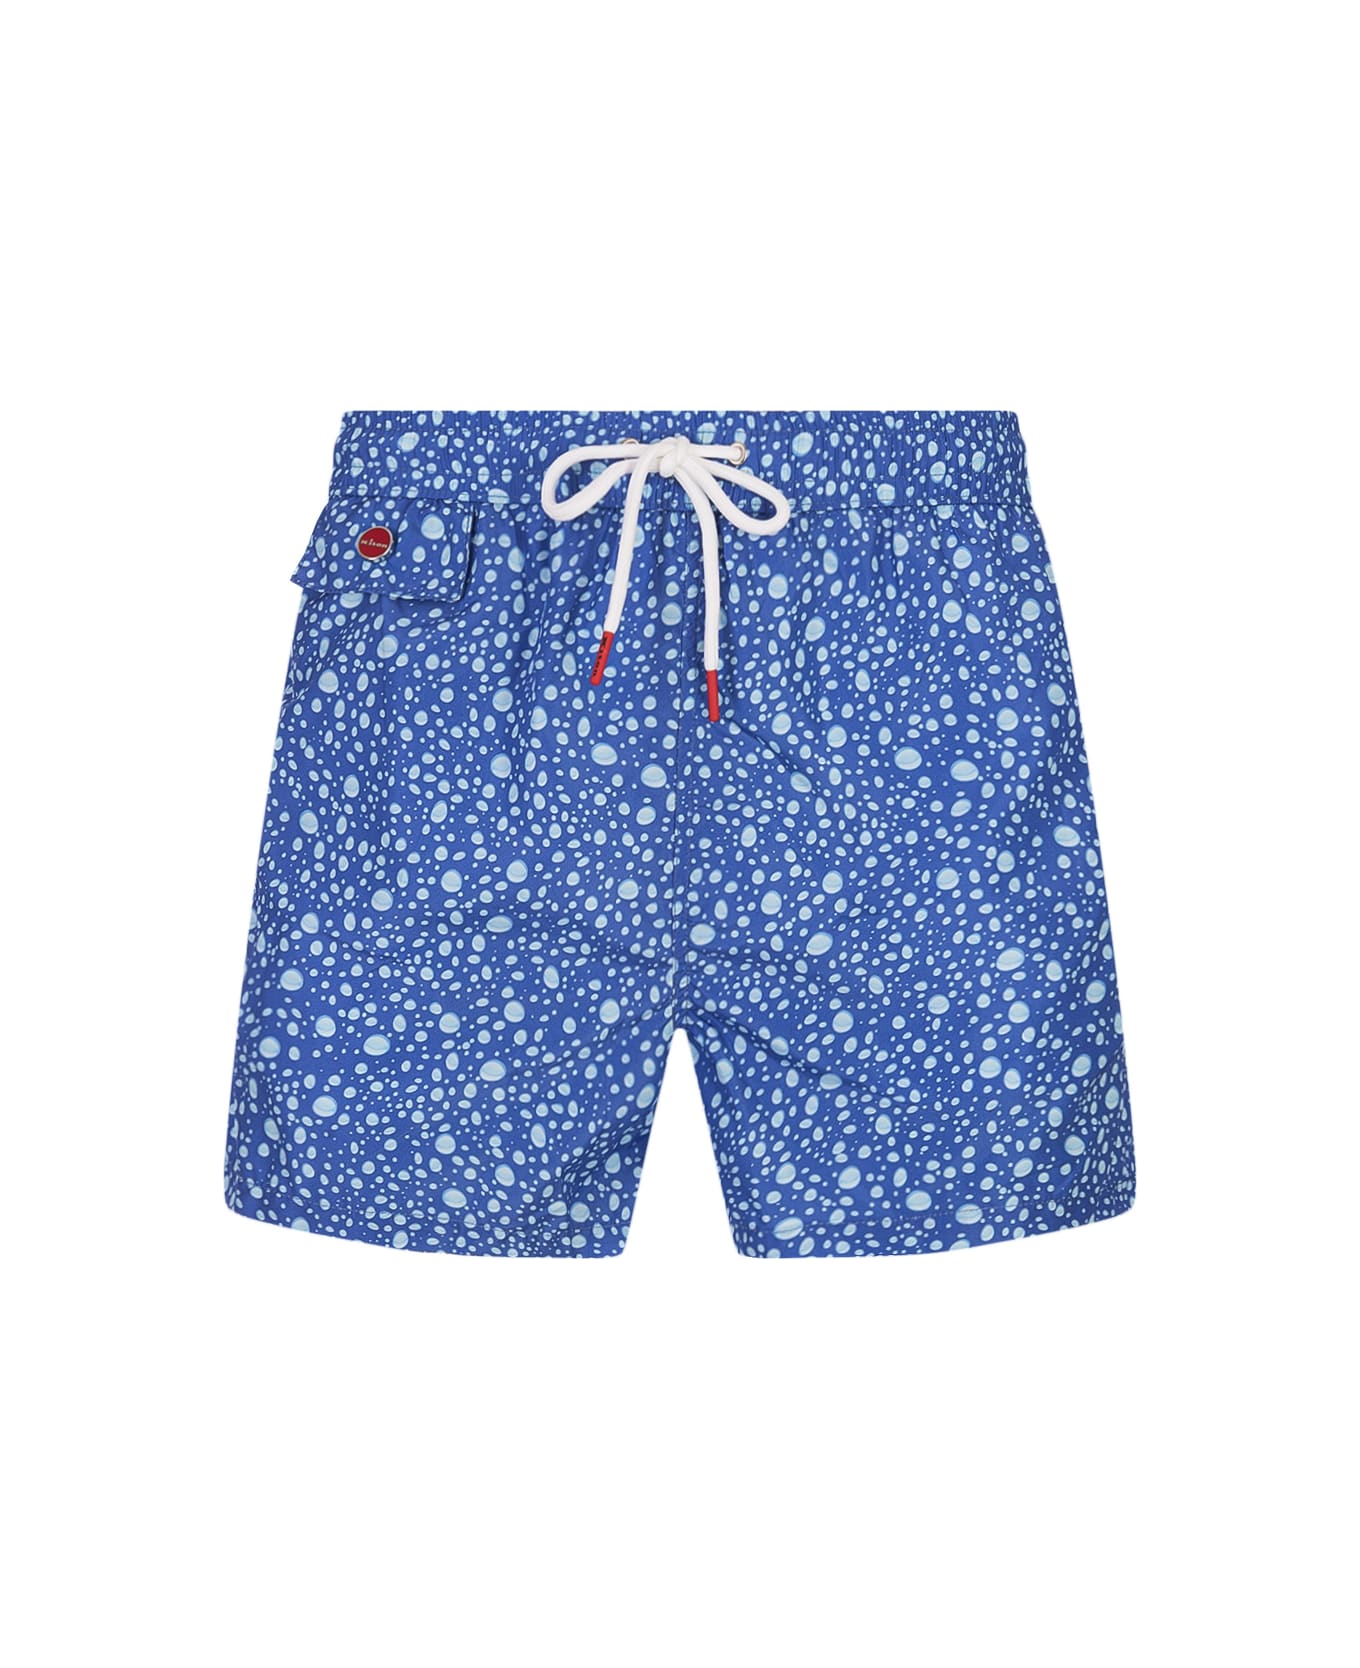 Kiton Blue Swim Shorts With Water Drops Pattern - Azzurro